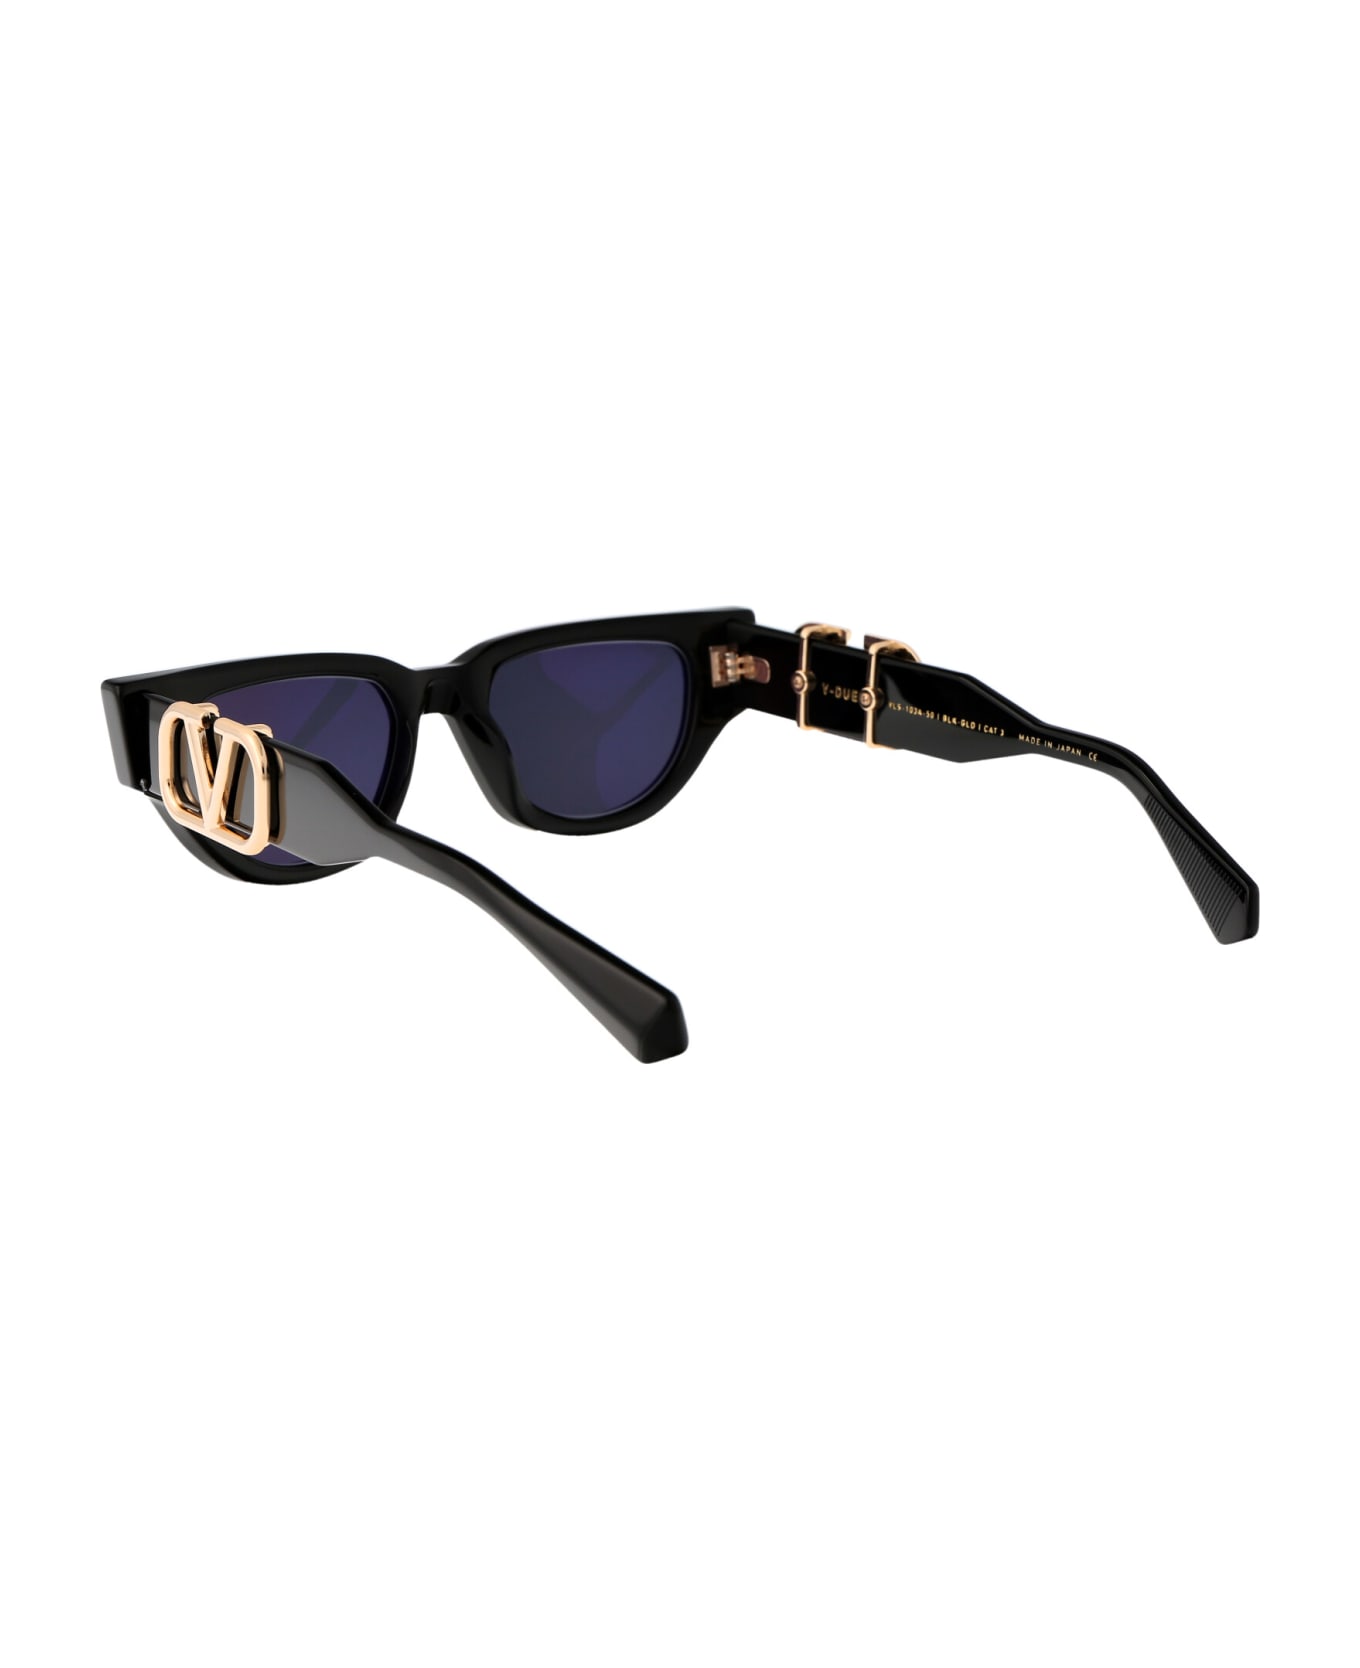 Valentino Eyewear V - Due Sunglasses - 103mono-frame aviator sunglasses